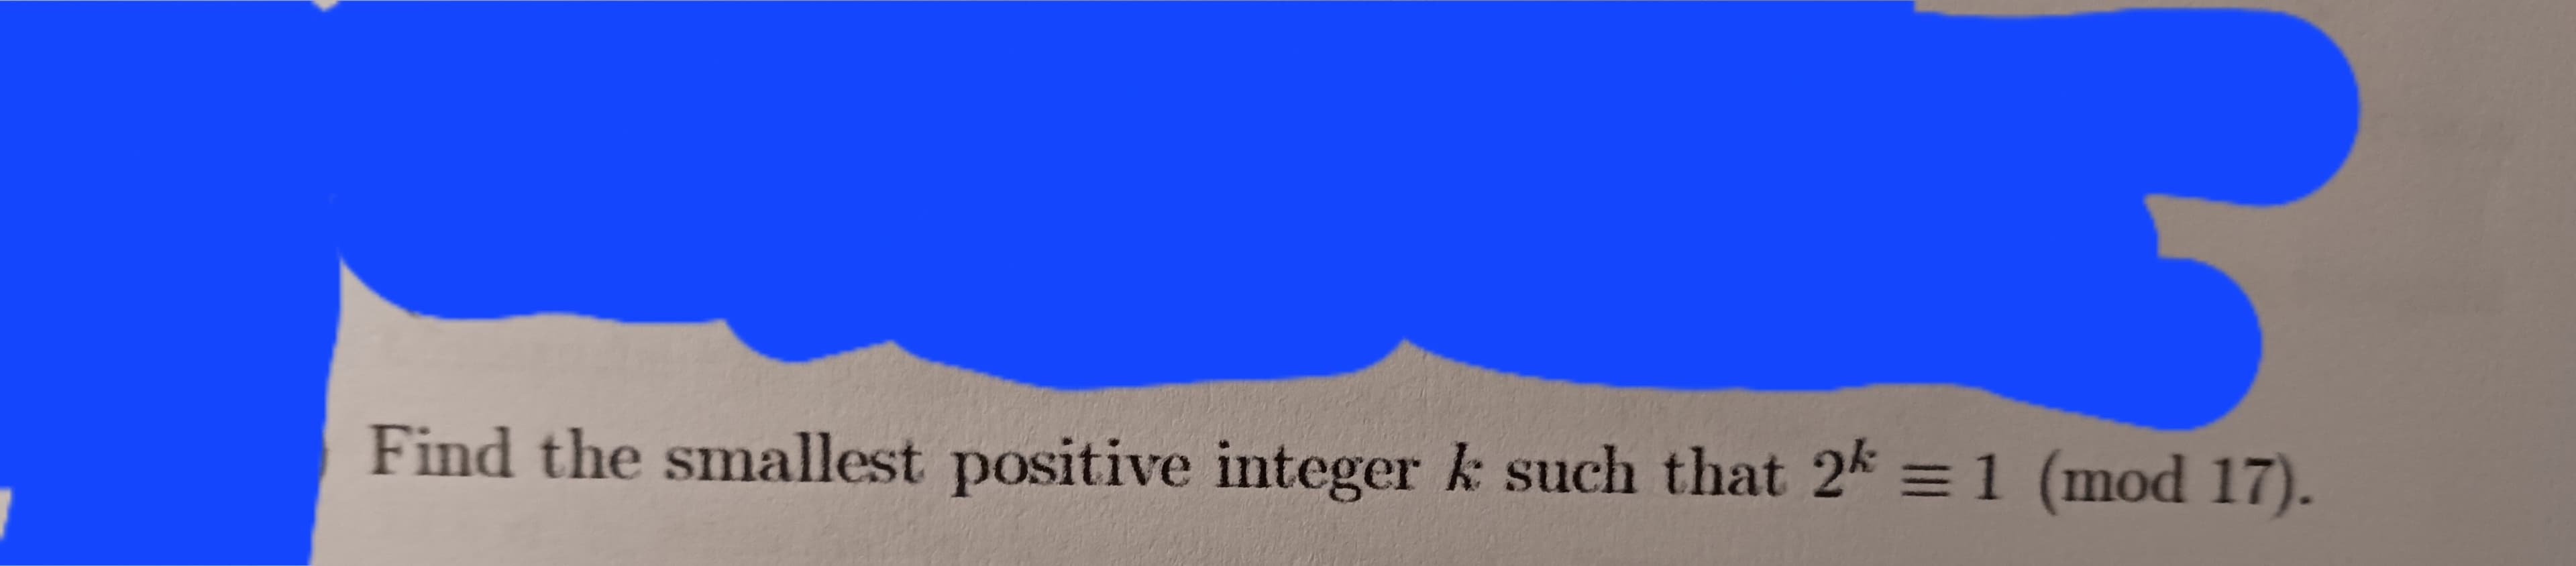 Find the smallest positive integer k such that 2k = 1 (mod 17).